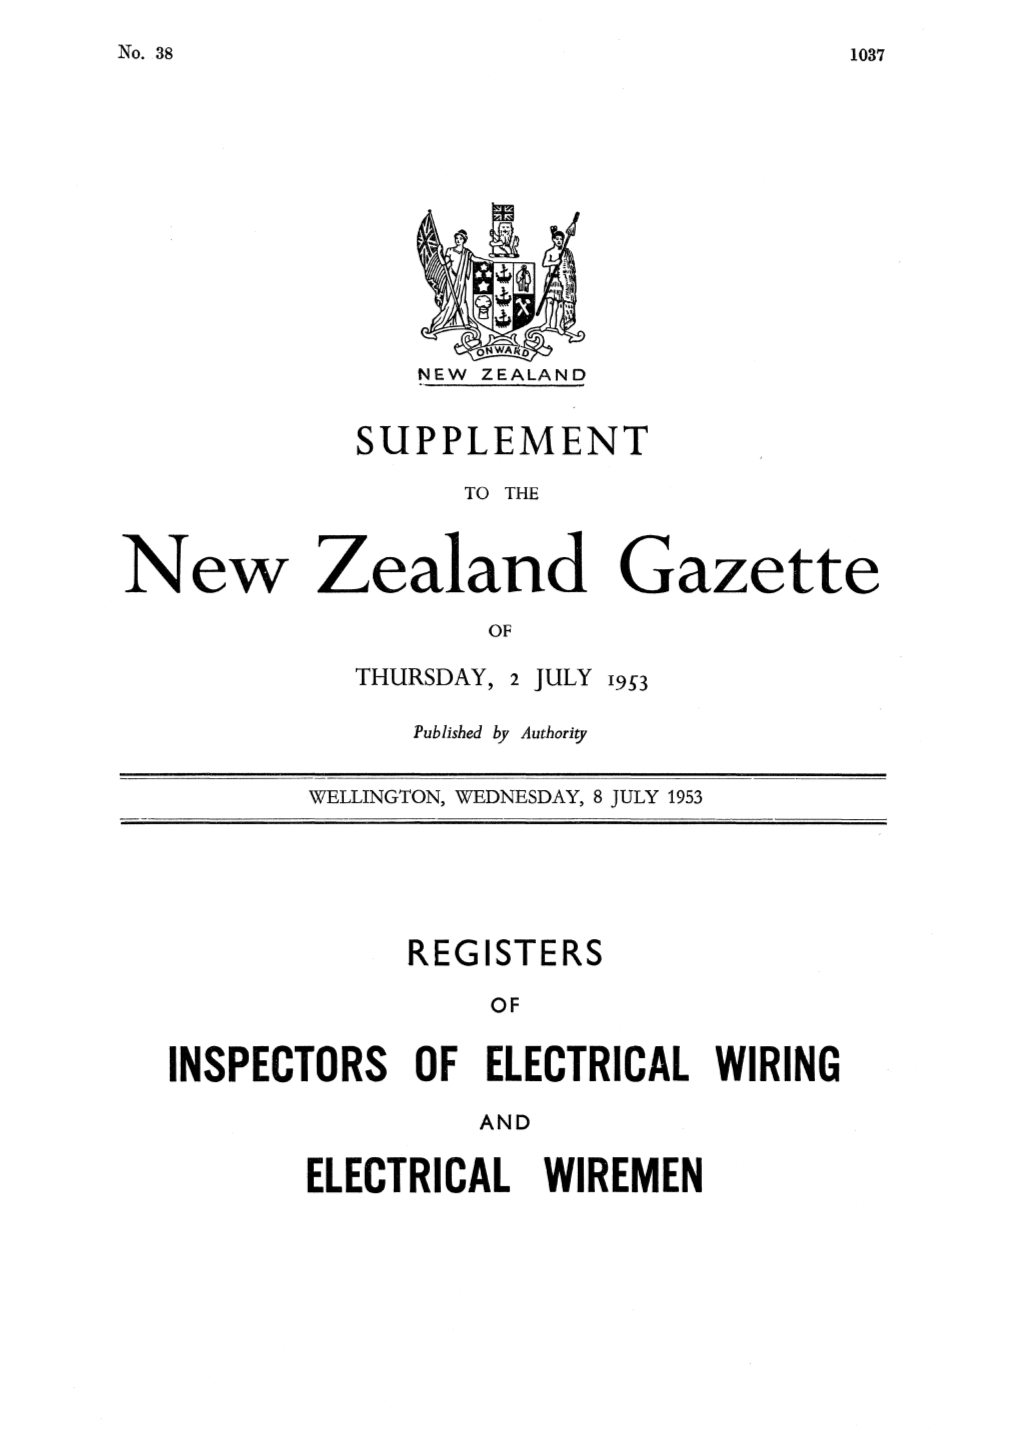 New Zealand Gazette OF